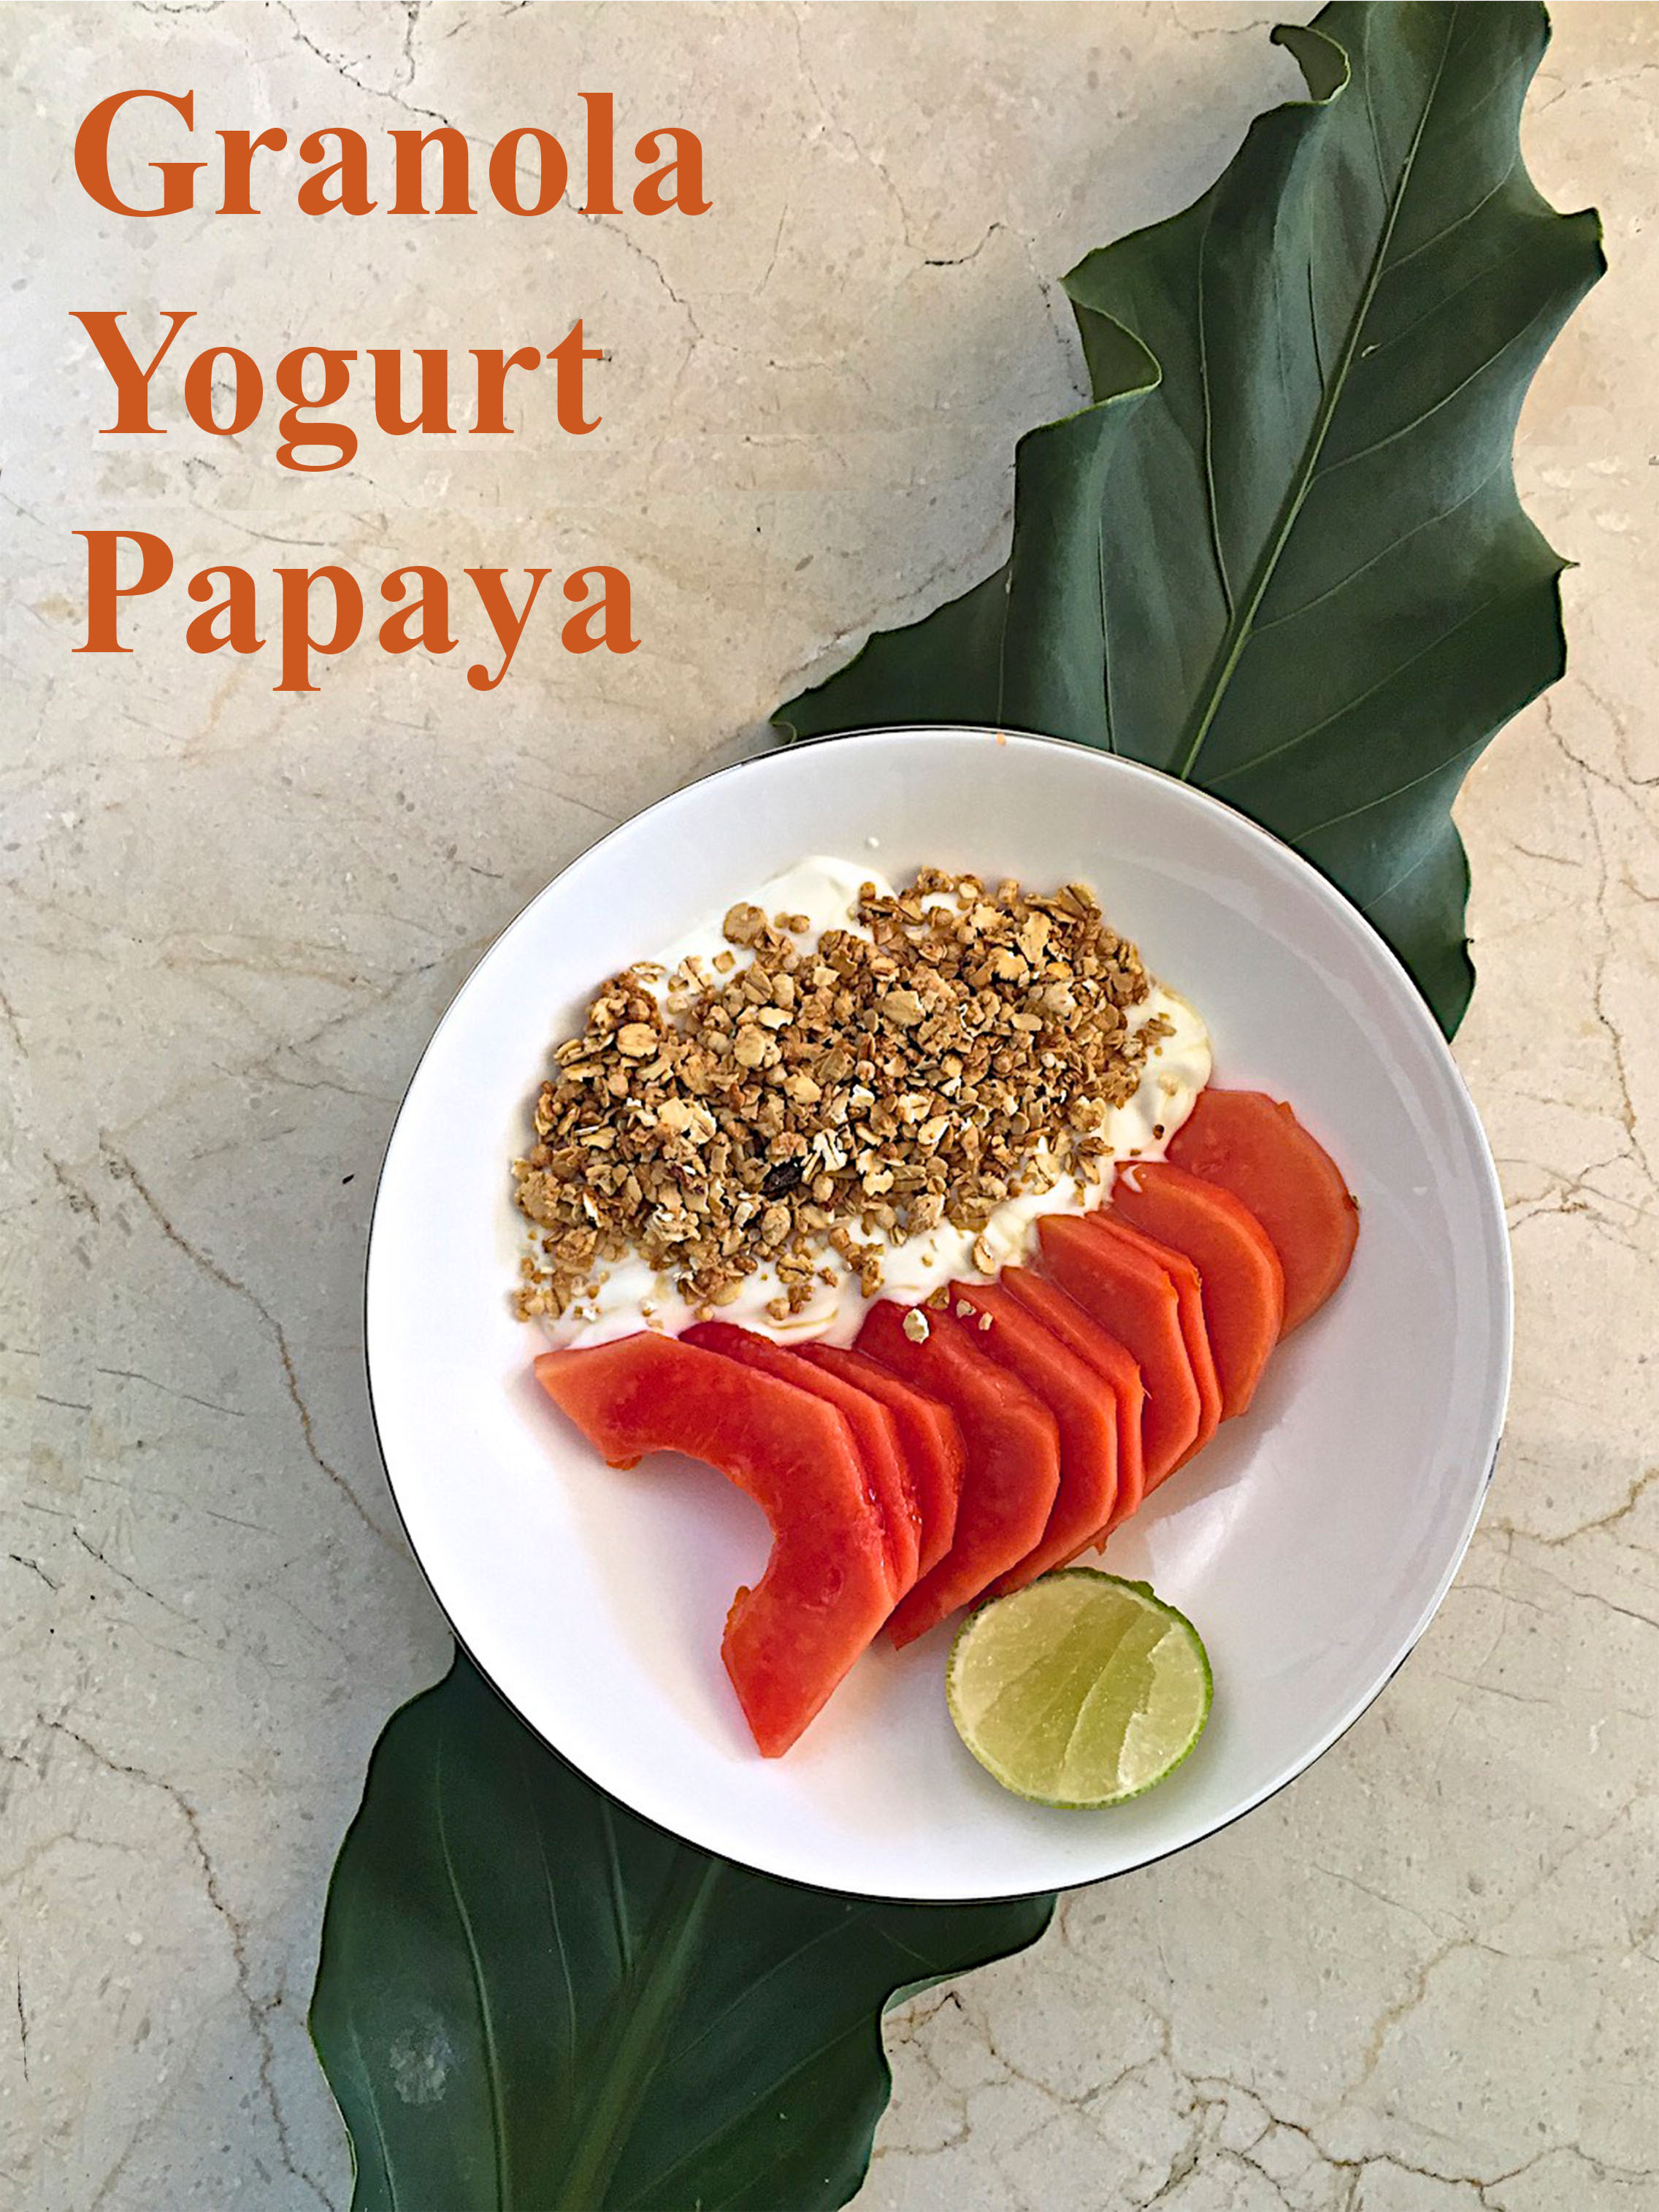 Granola, yogurt and papaya